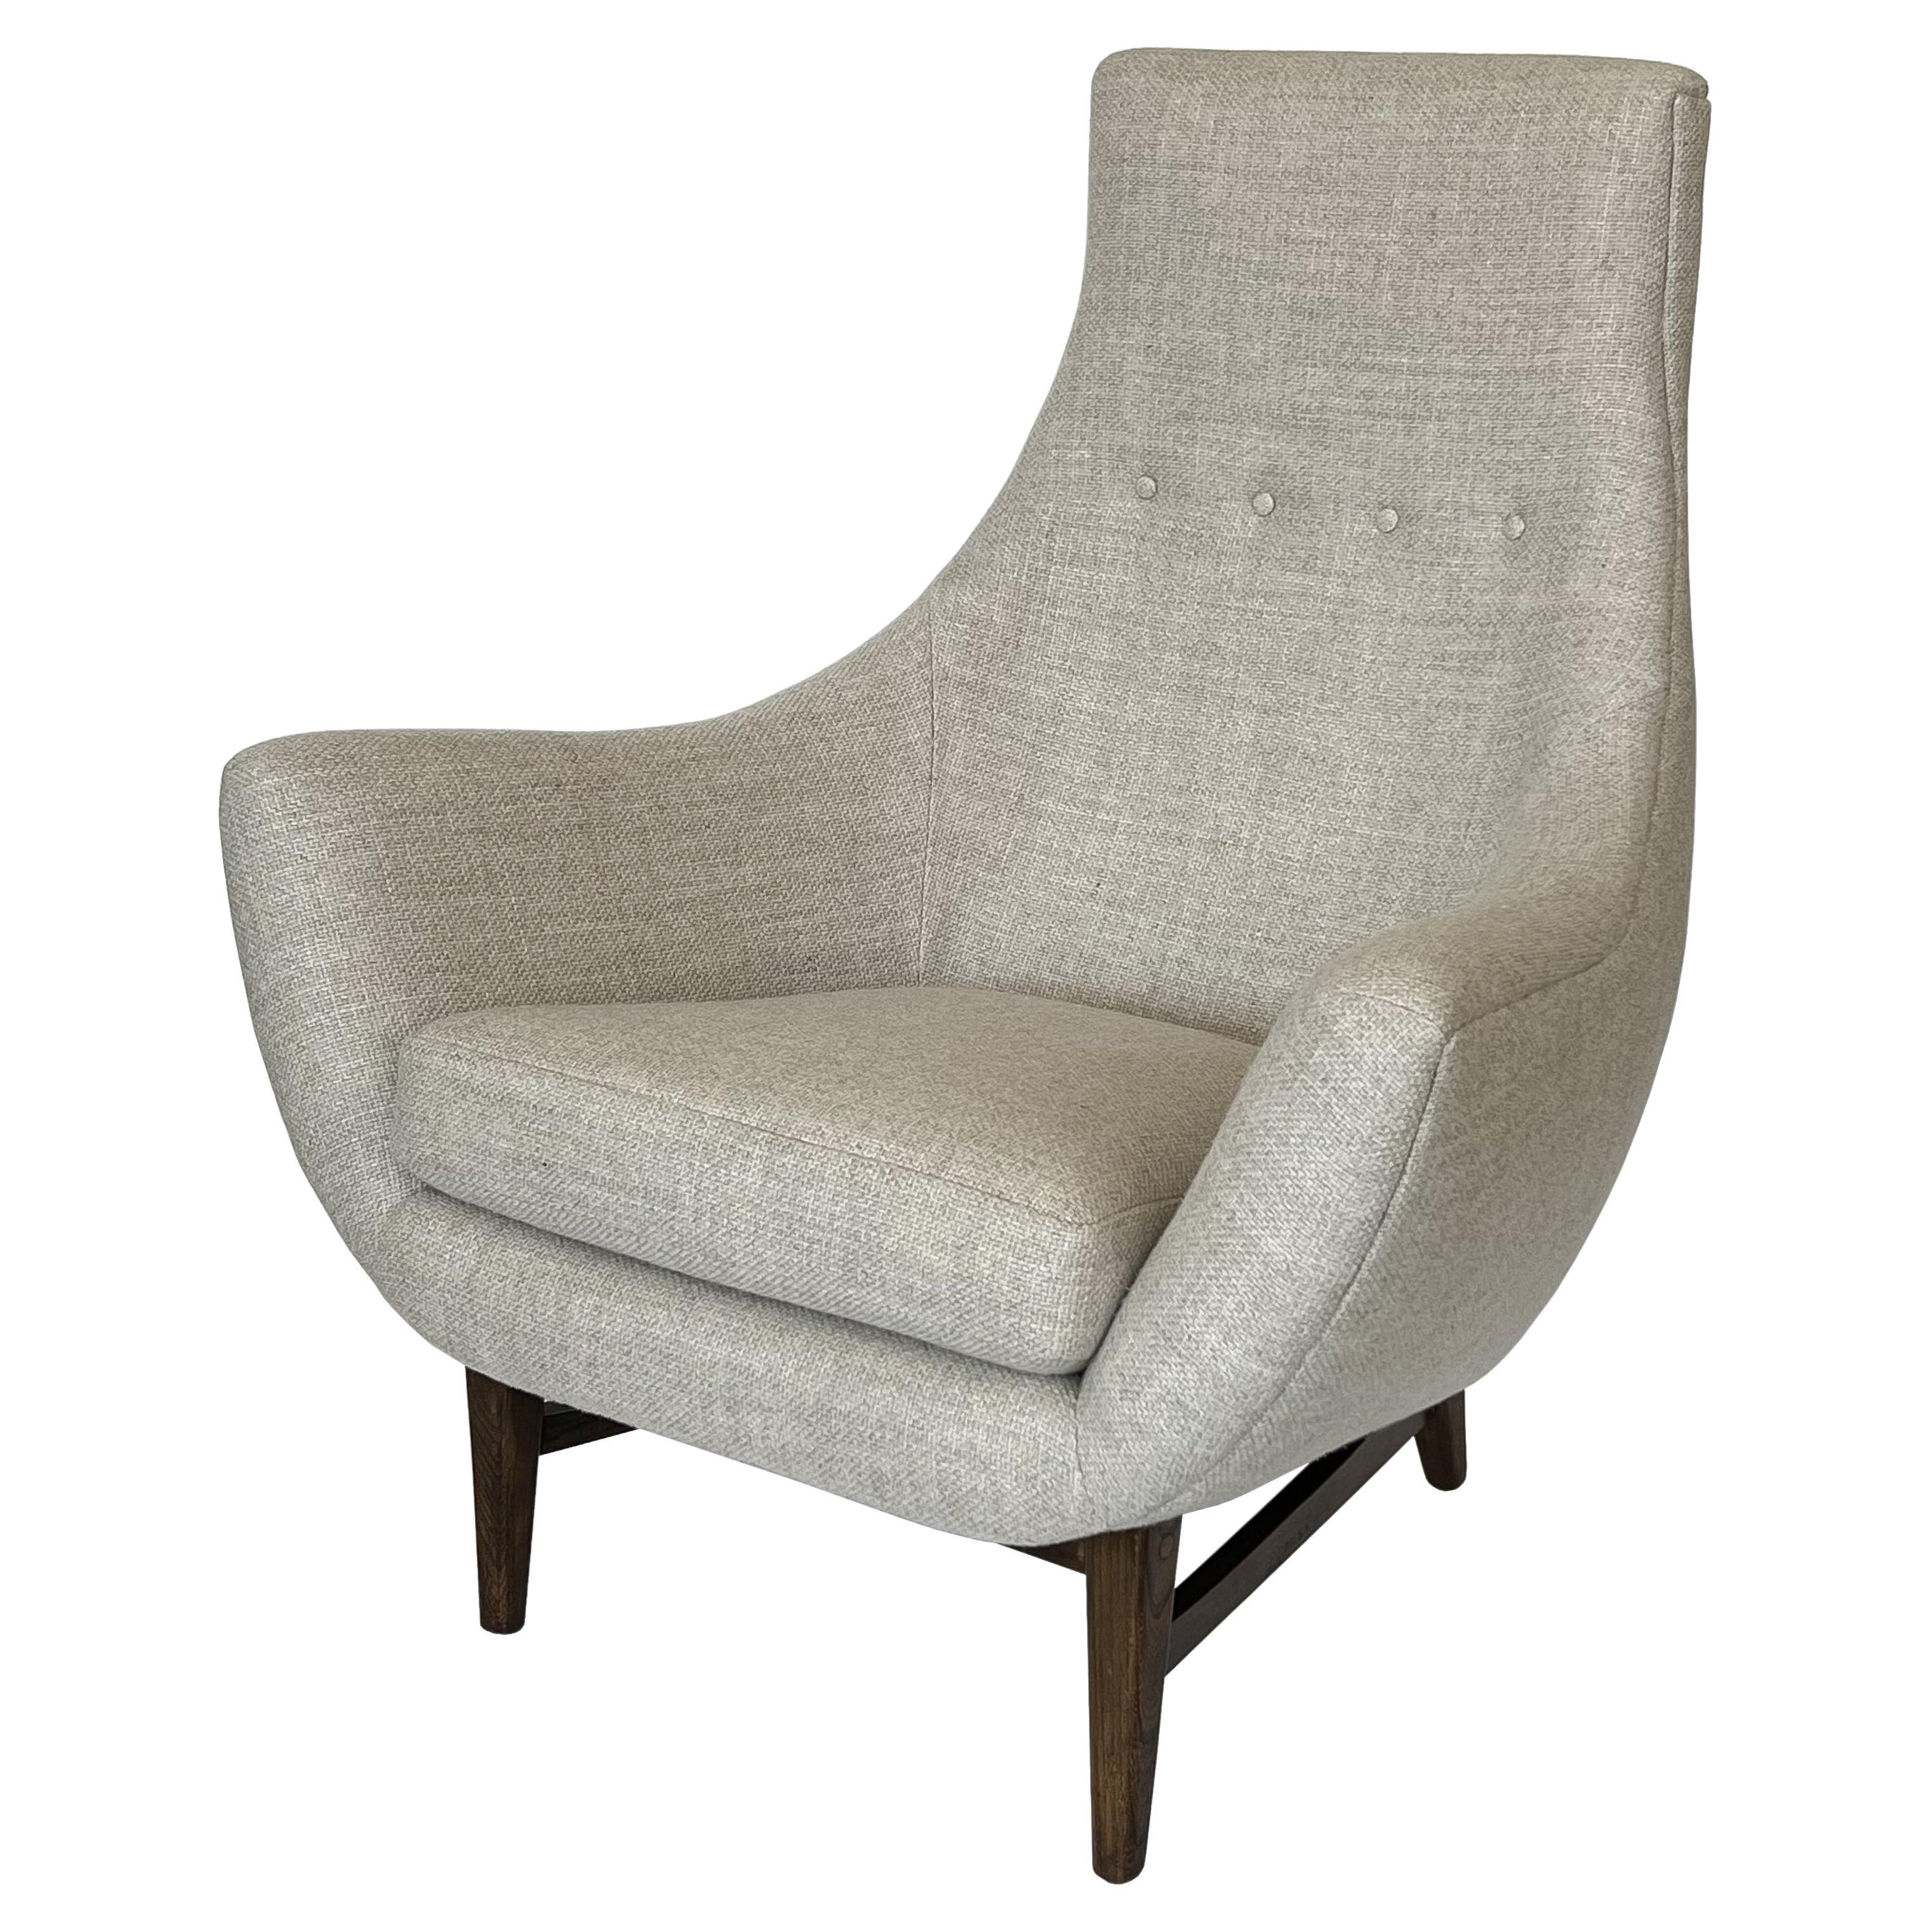 Adrian Pearsall High Back Sculptural Lounge Chair